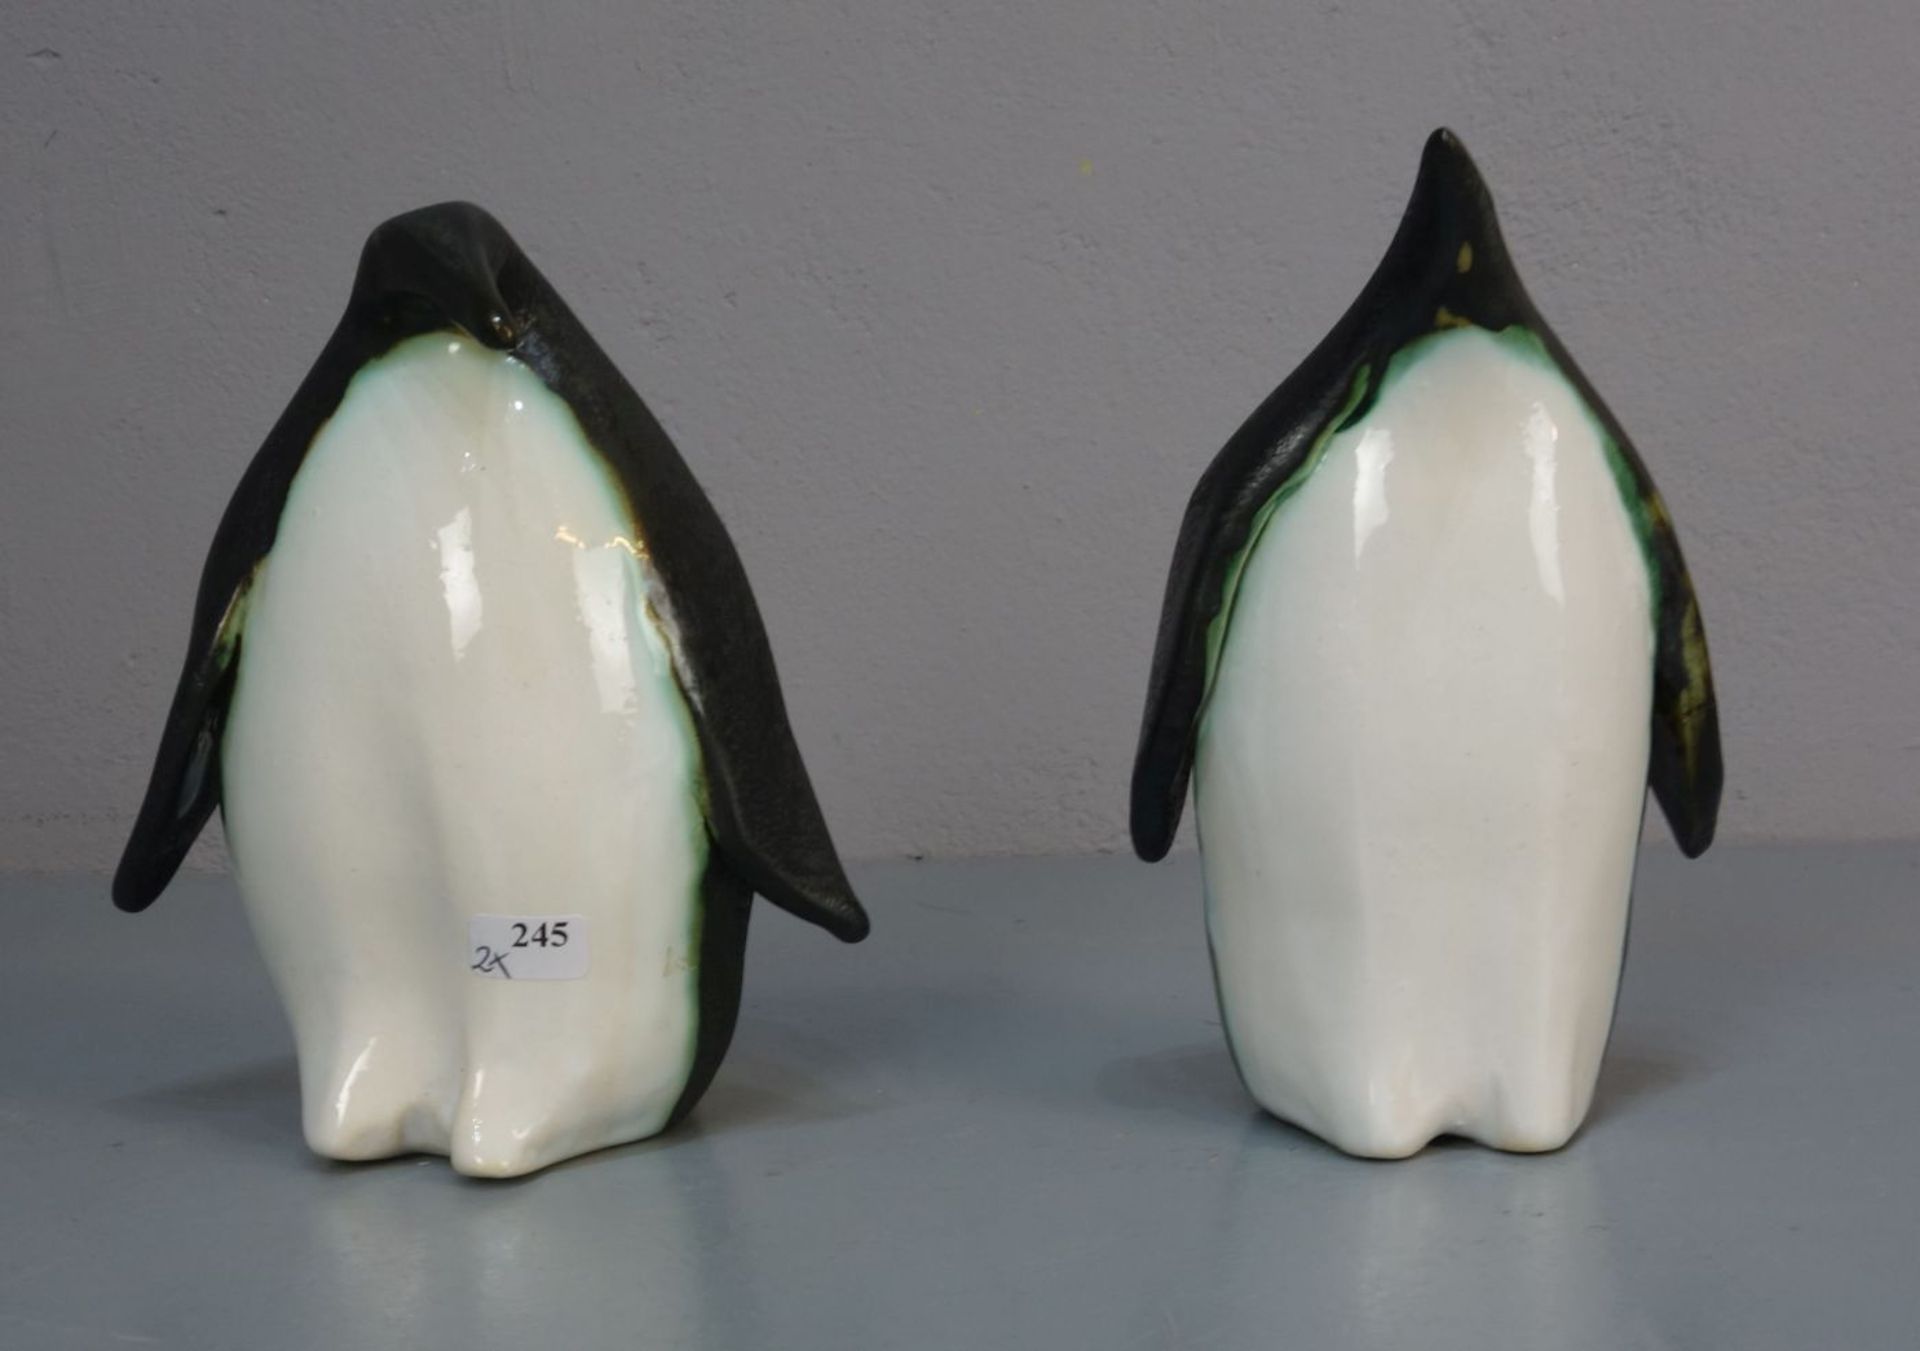 KERAMIKFIGUREN: "Pinguine" / ceramic penguins, Studiokeramik, heller Scherben, weiß, schwarz und - Bild 2 aus 5